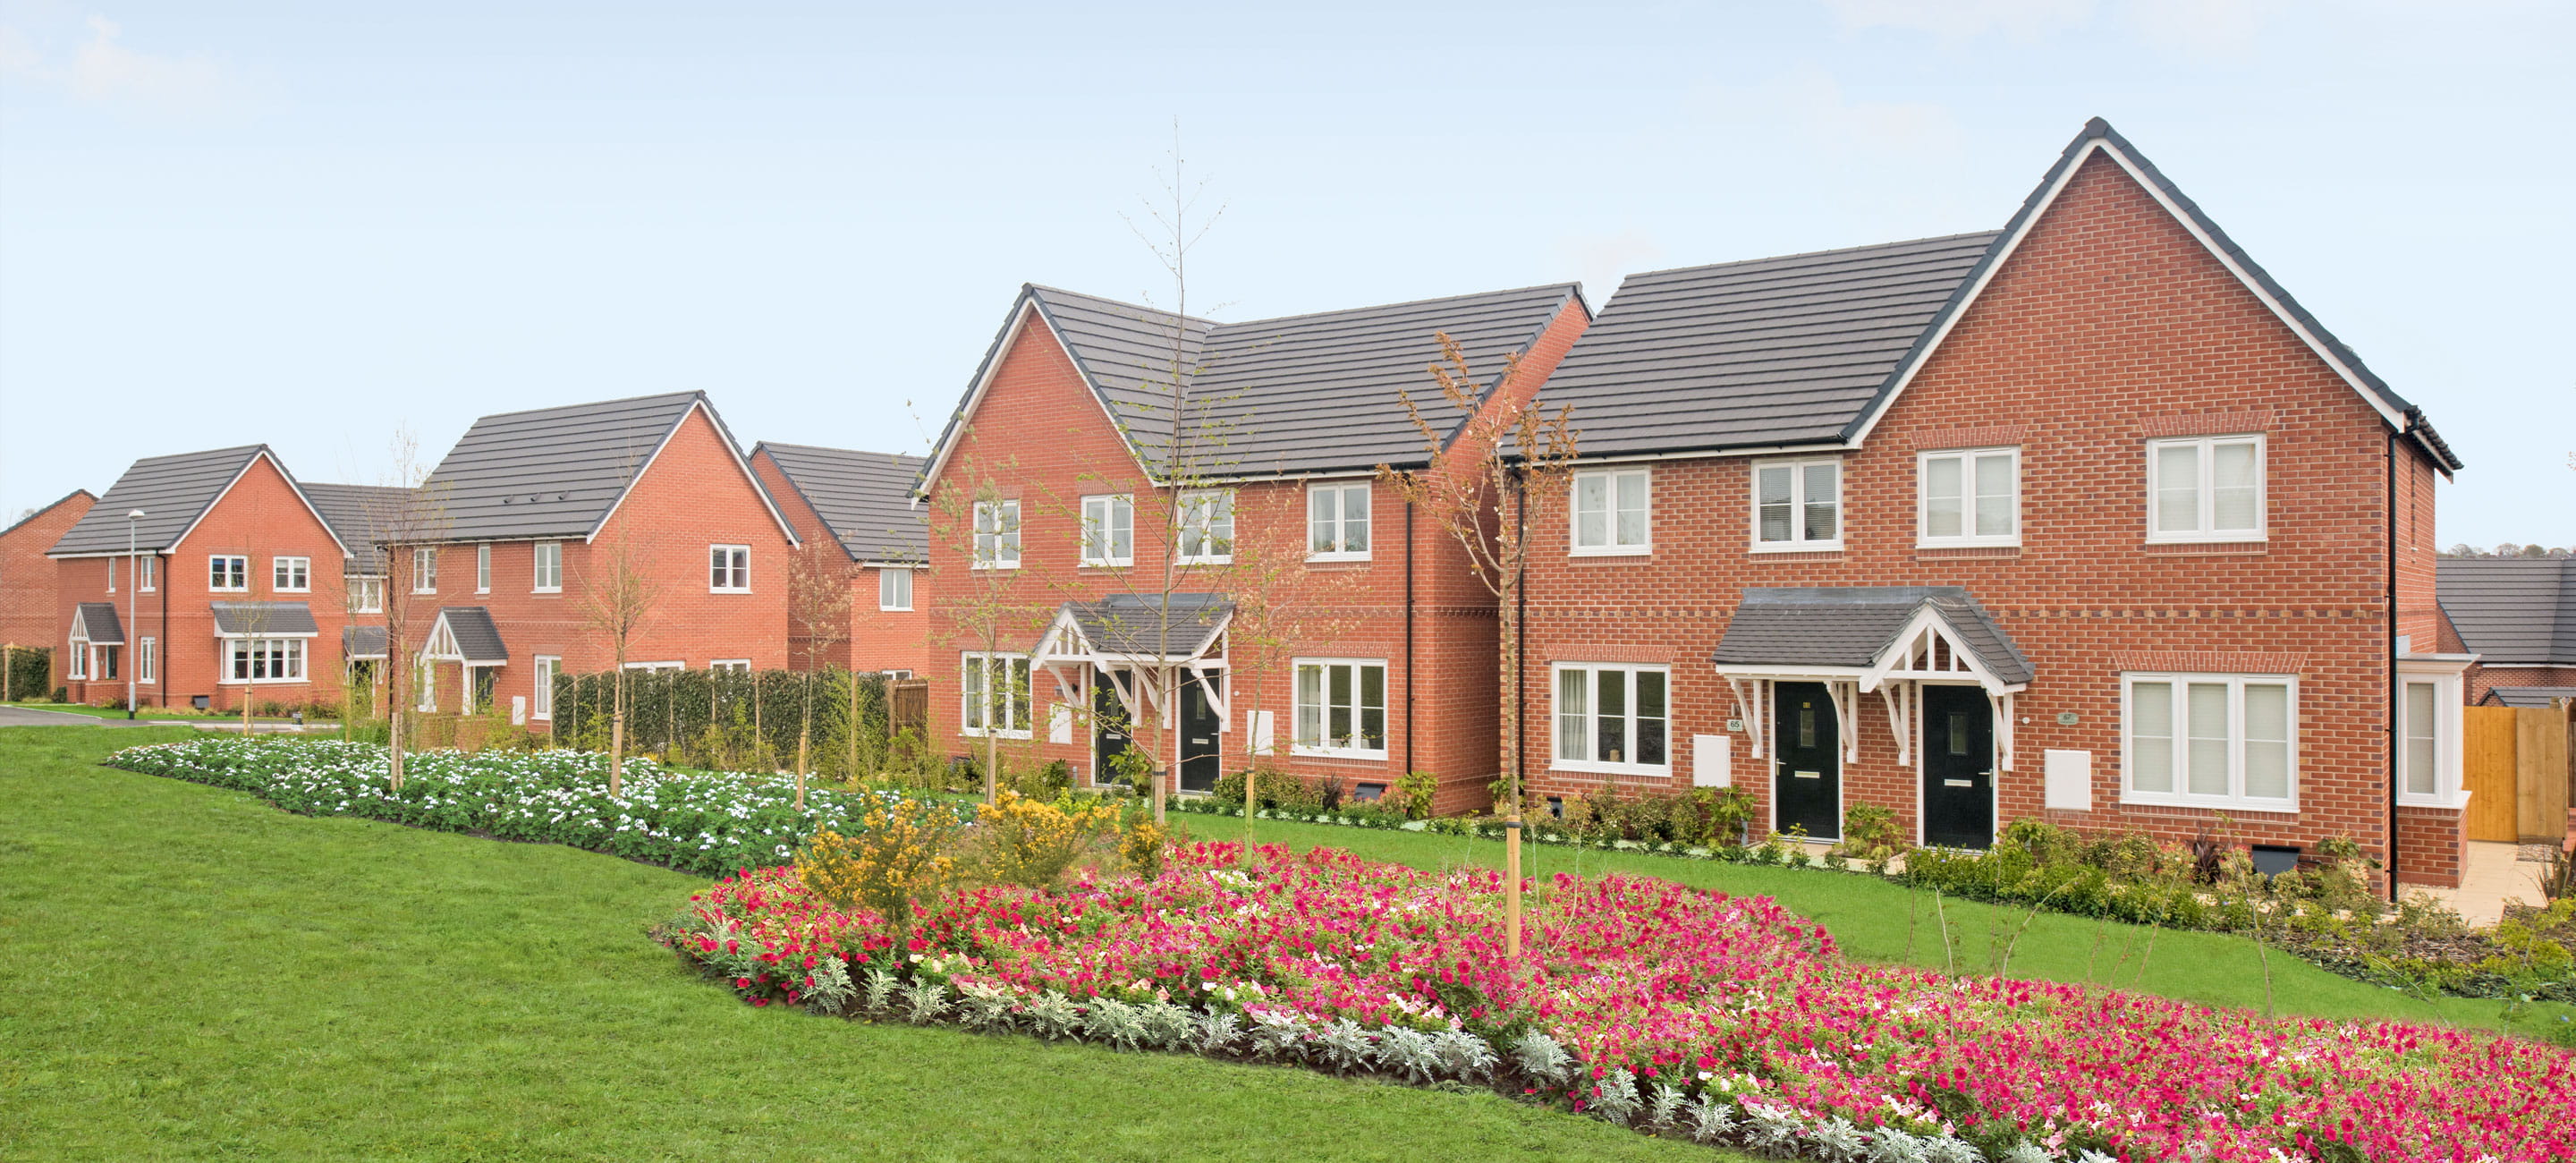 Bloor Homes at Brindley Village, Stoke-on-Trent